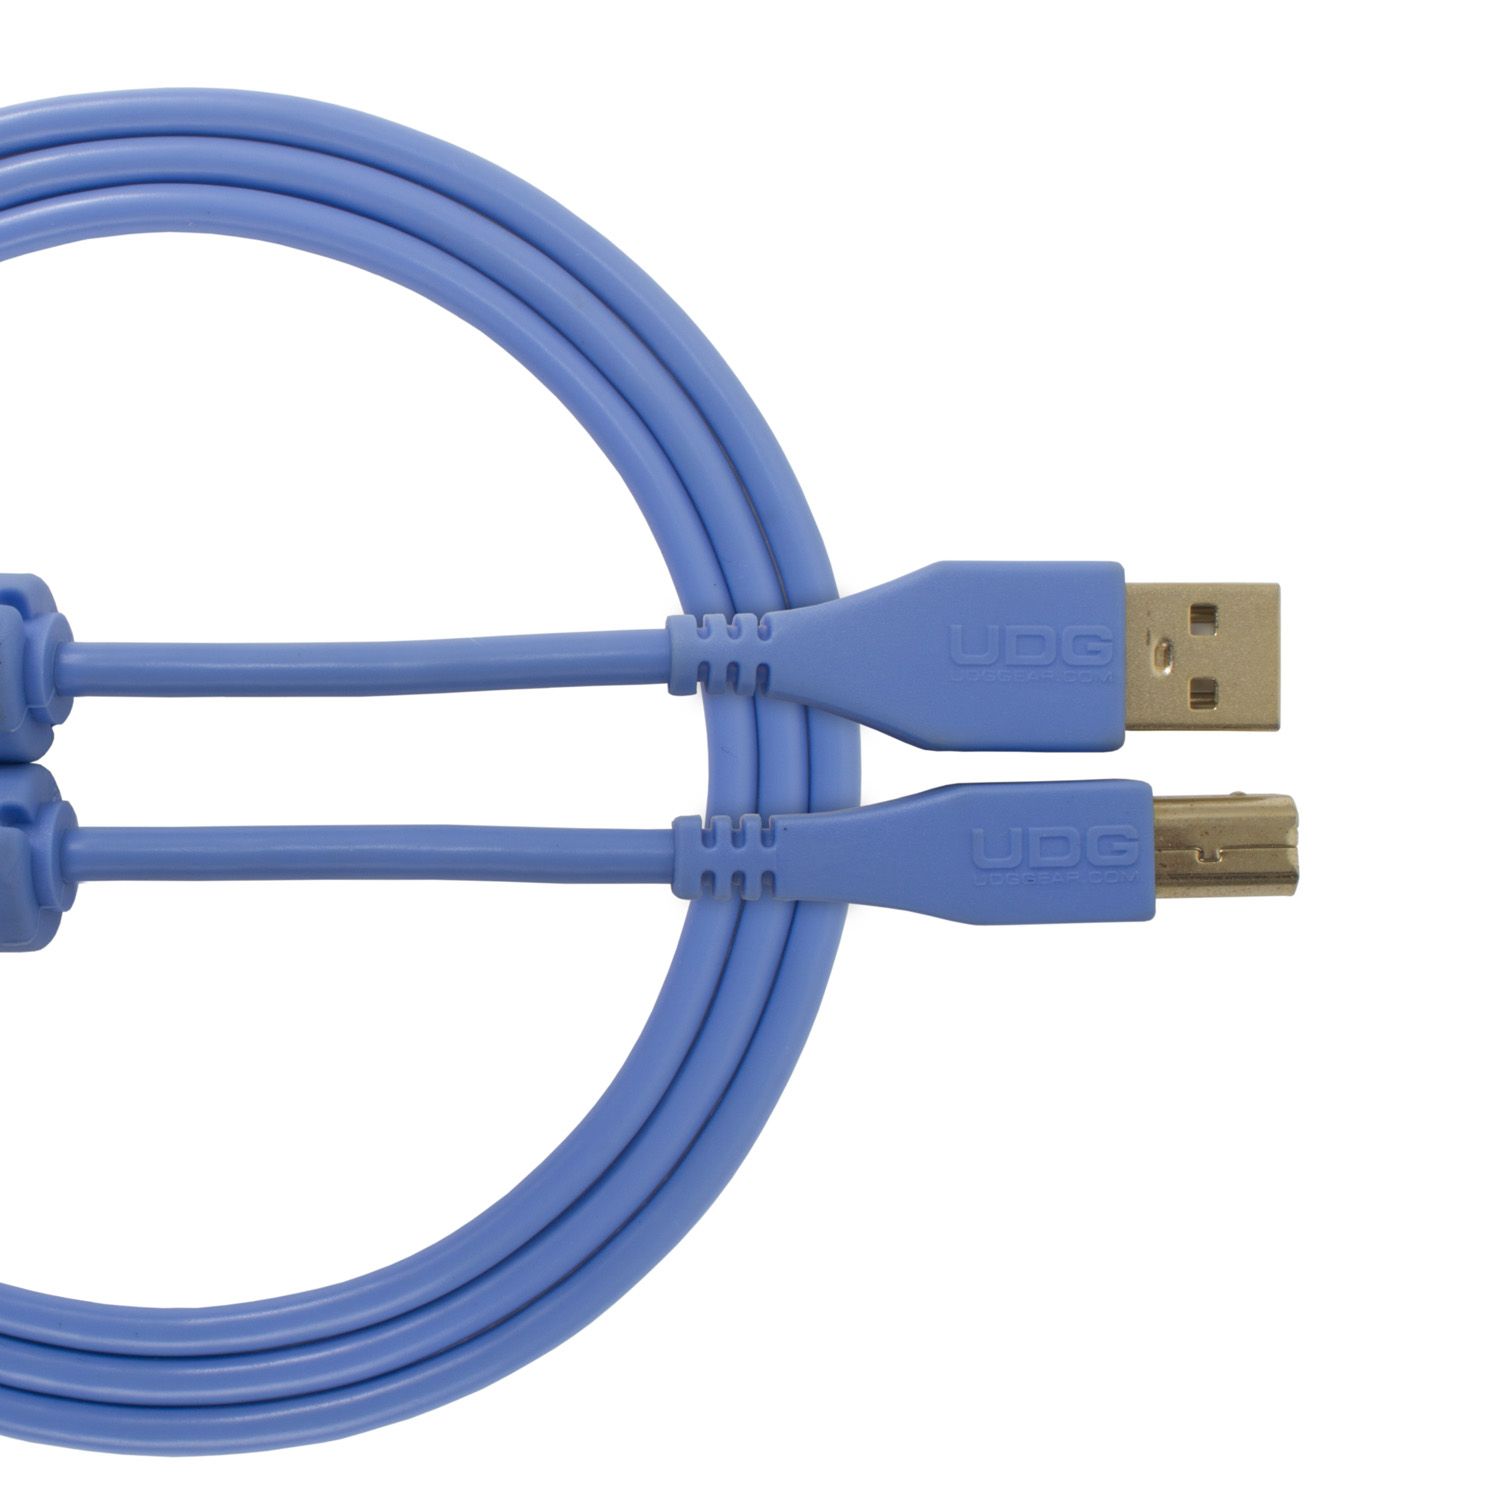 U95002LB UDG AUDIO CABLE USB 2.0 A-B BLUE STRA 2M